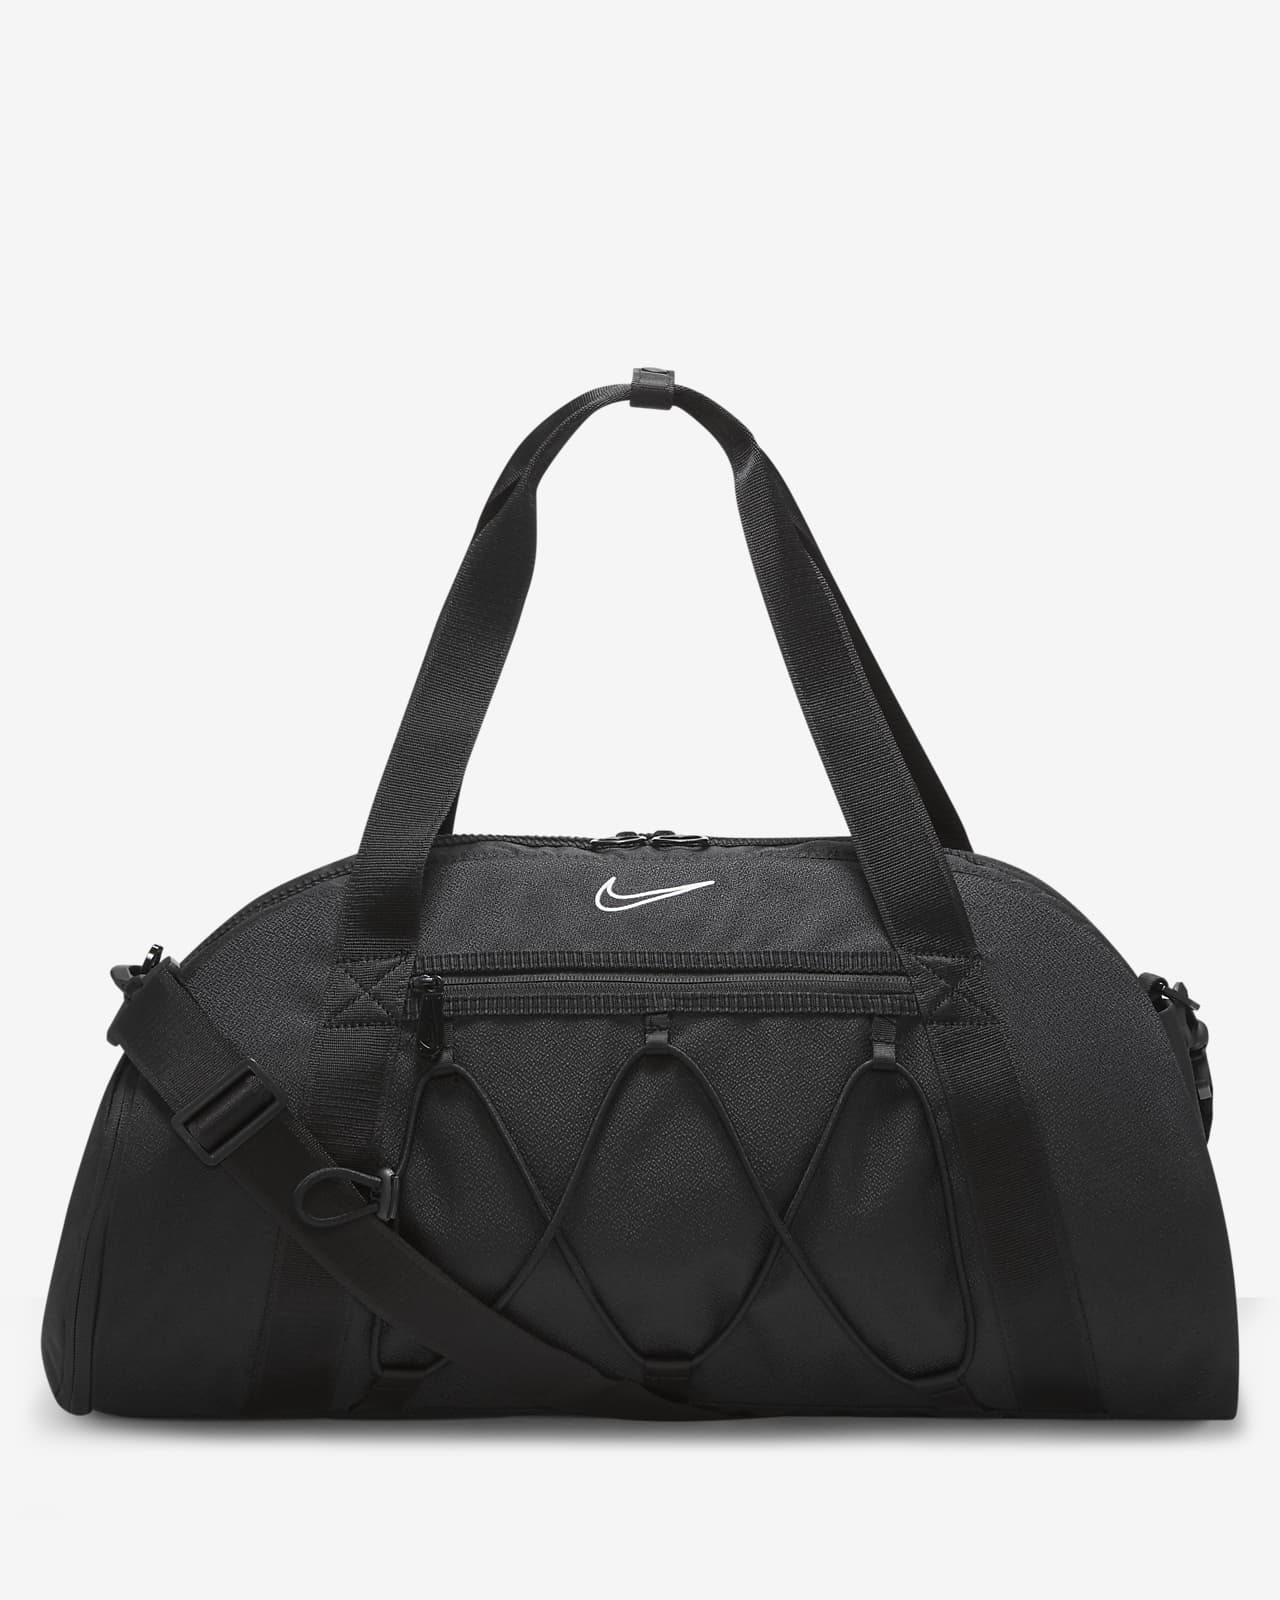 Nike tote bag , blue pink zipper RARE